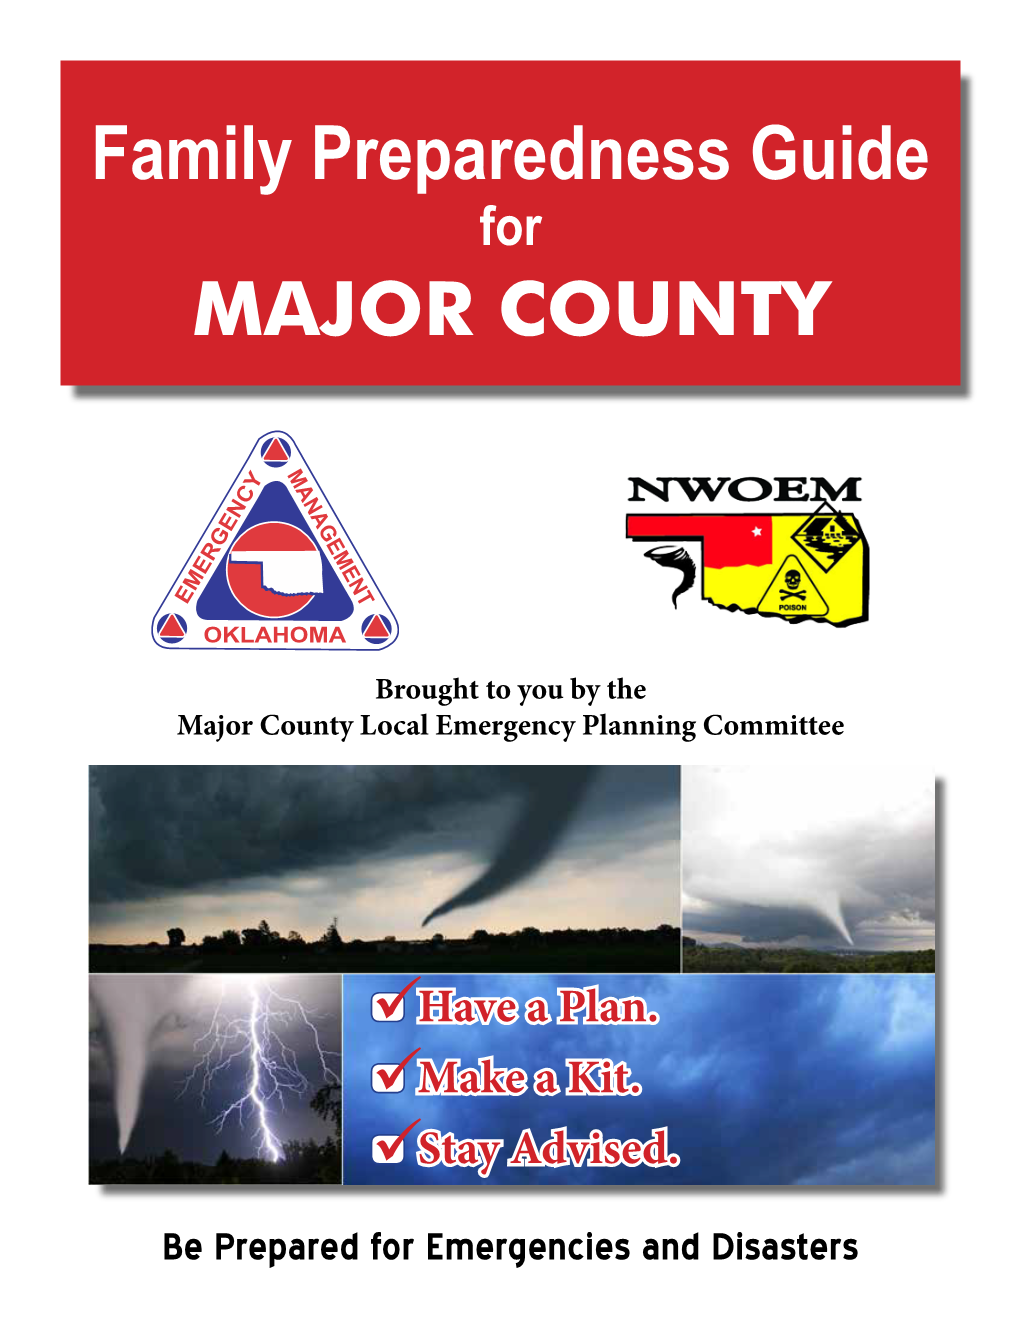 Family Preparedness Guide MAJOR COUNTY